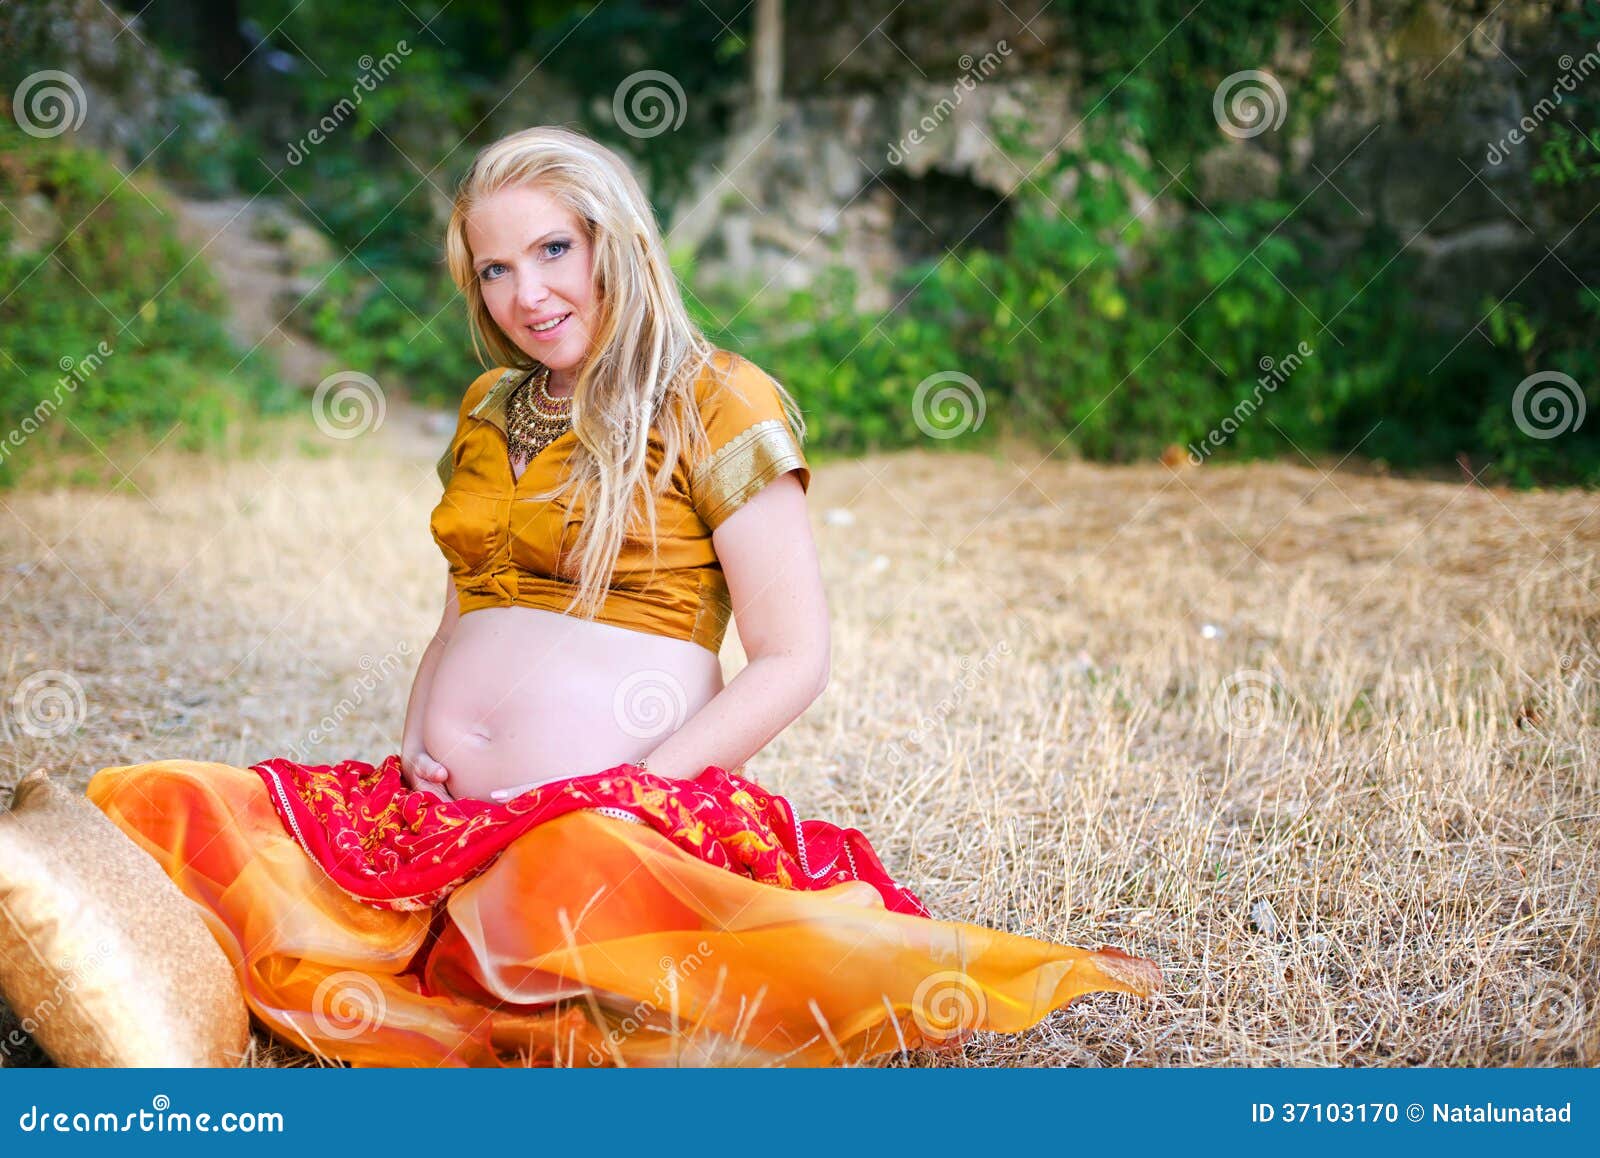 Pregnant Saree Stock Photos - Free & Royalty-Free Stock Photos